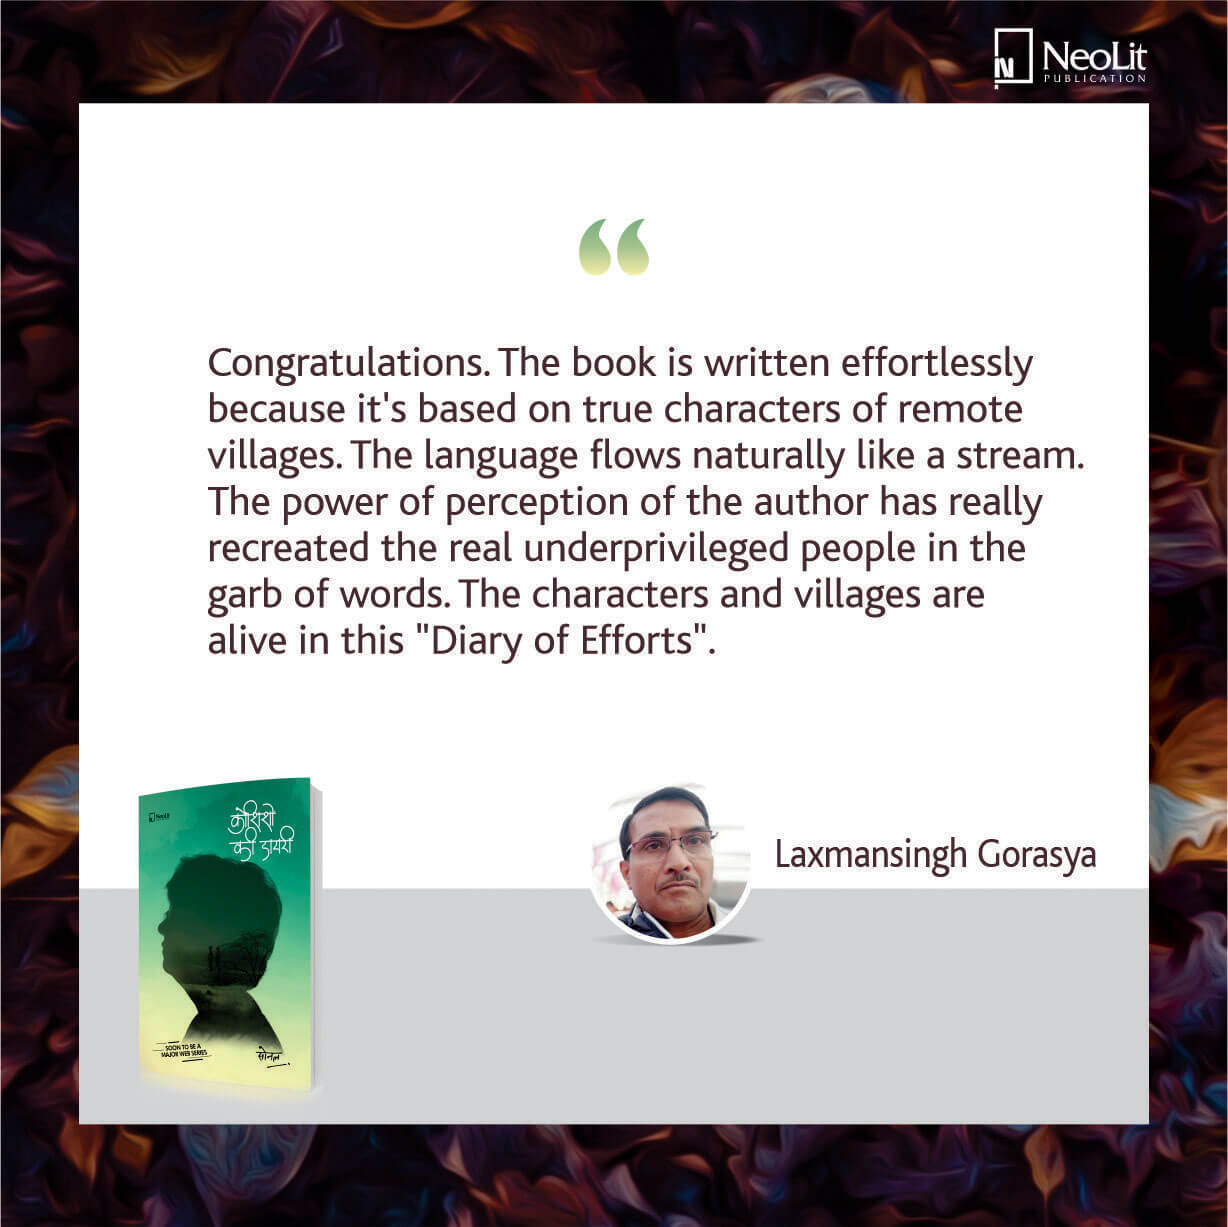  Review by Laxmansingh Gorasya